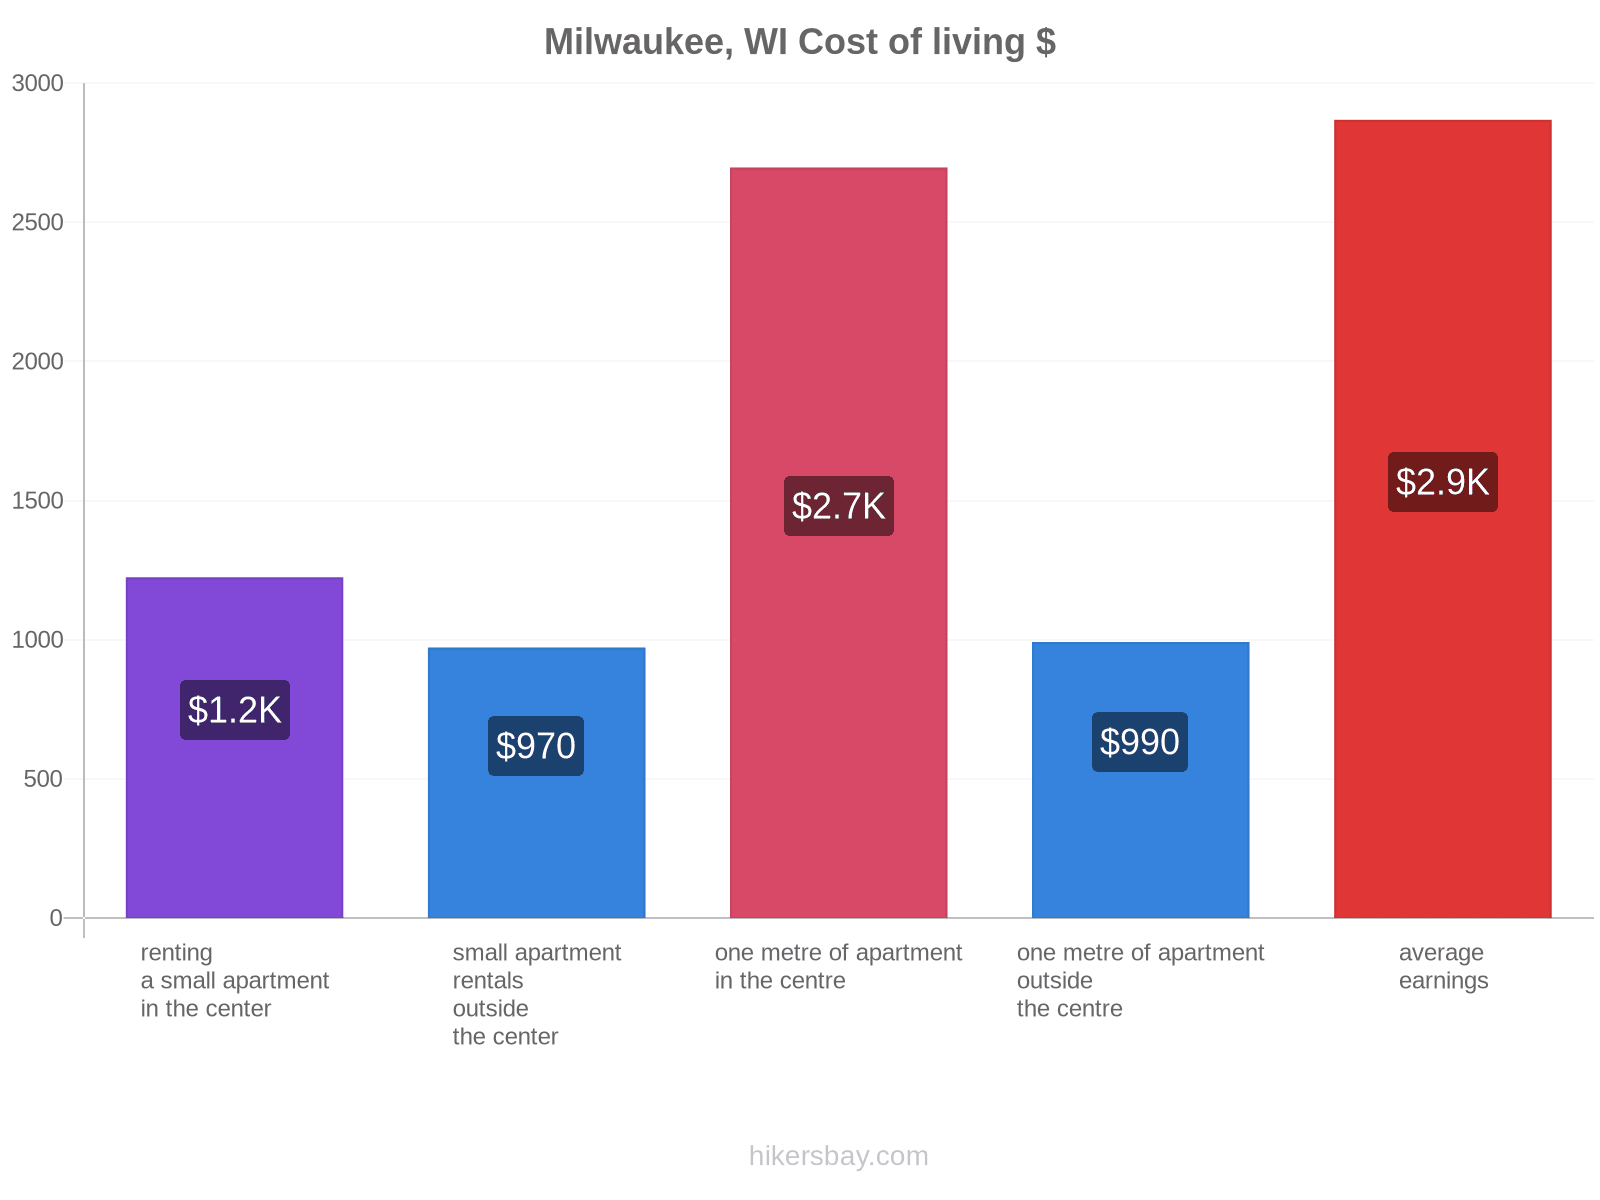 Milwaukee, WI cost of living hikersbay.com